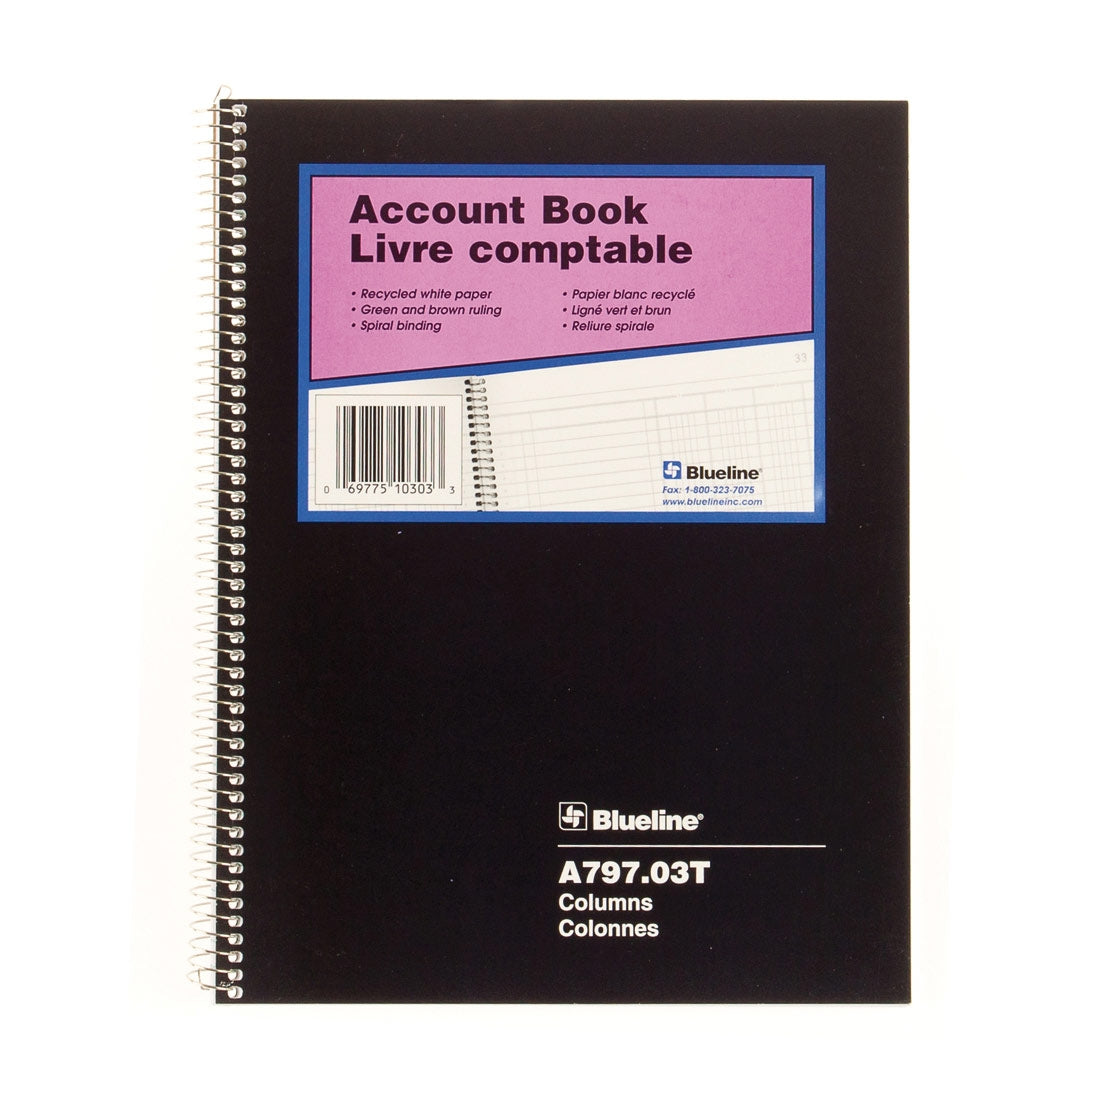 Account Book A797.03T